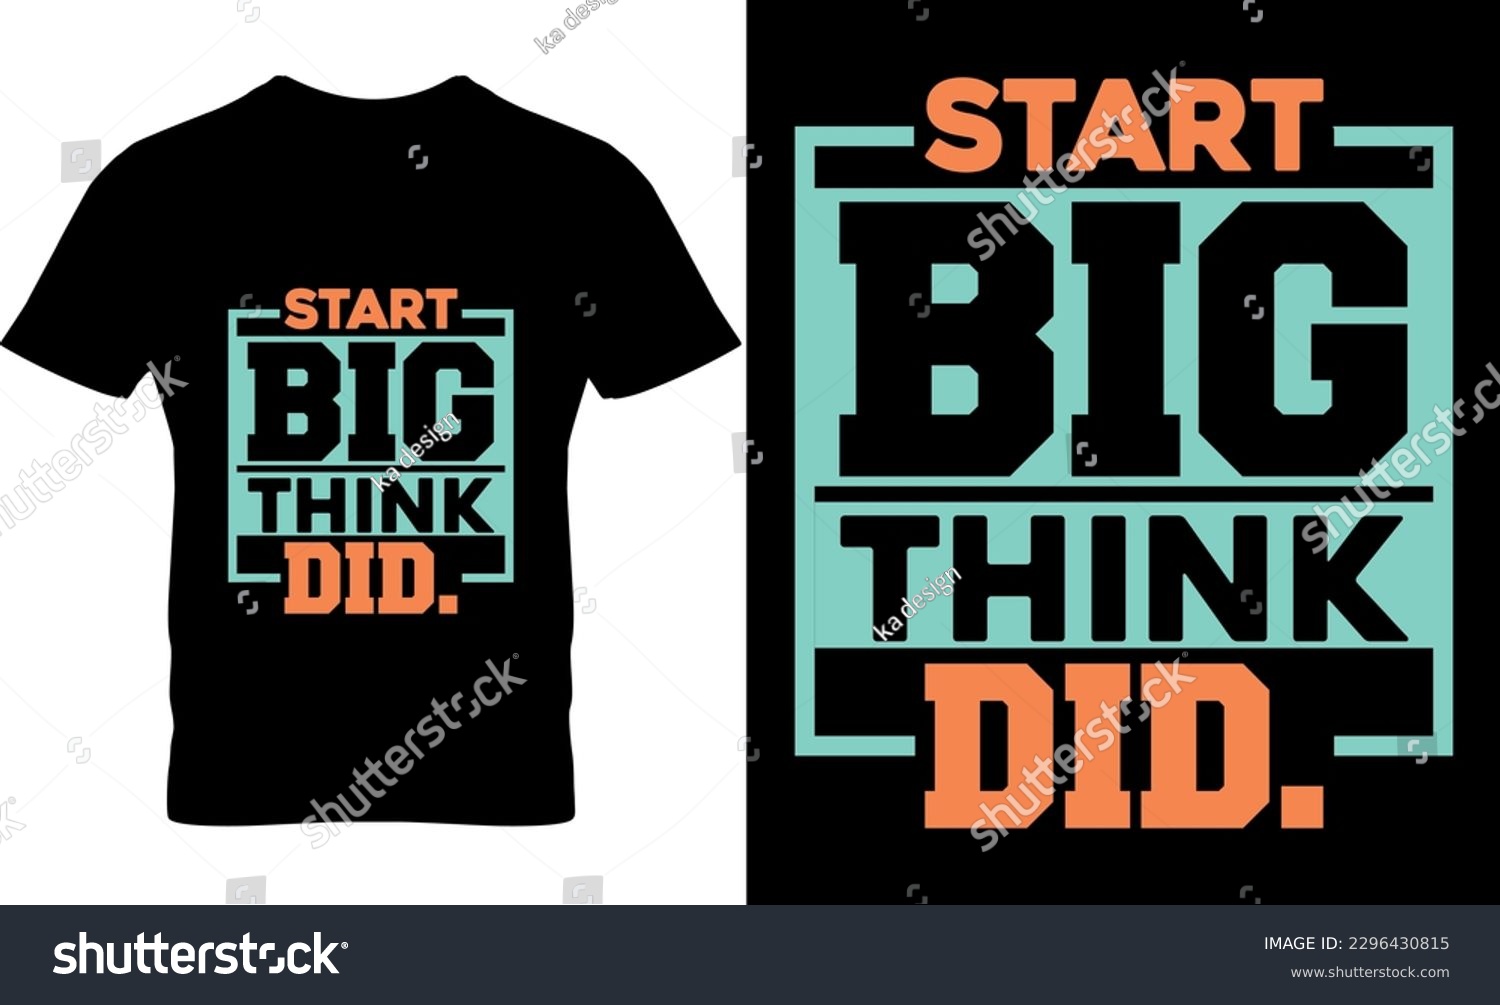 SVG of start big think did, Graphic, illustration, vector, typography, motivational, inspiration, inspiration t-shirt design, Typography t-shirt design, motivational quotes, motivational t-shirt design, svg